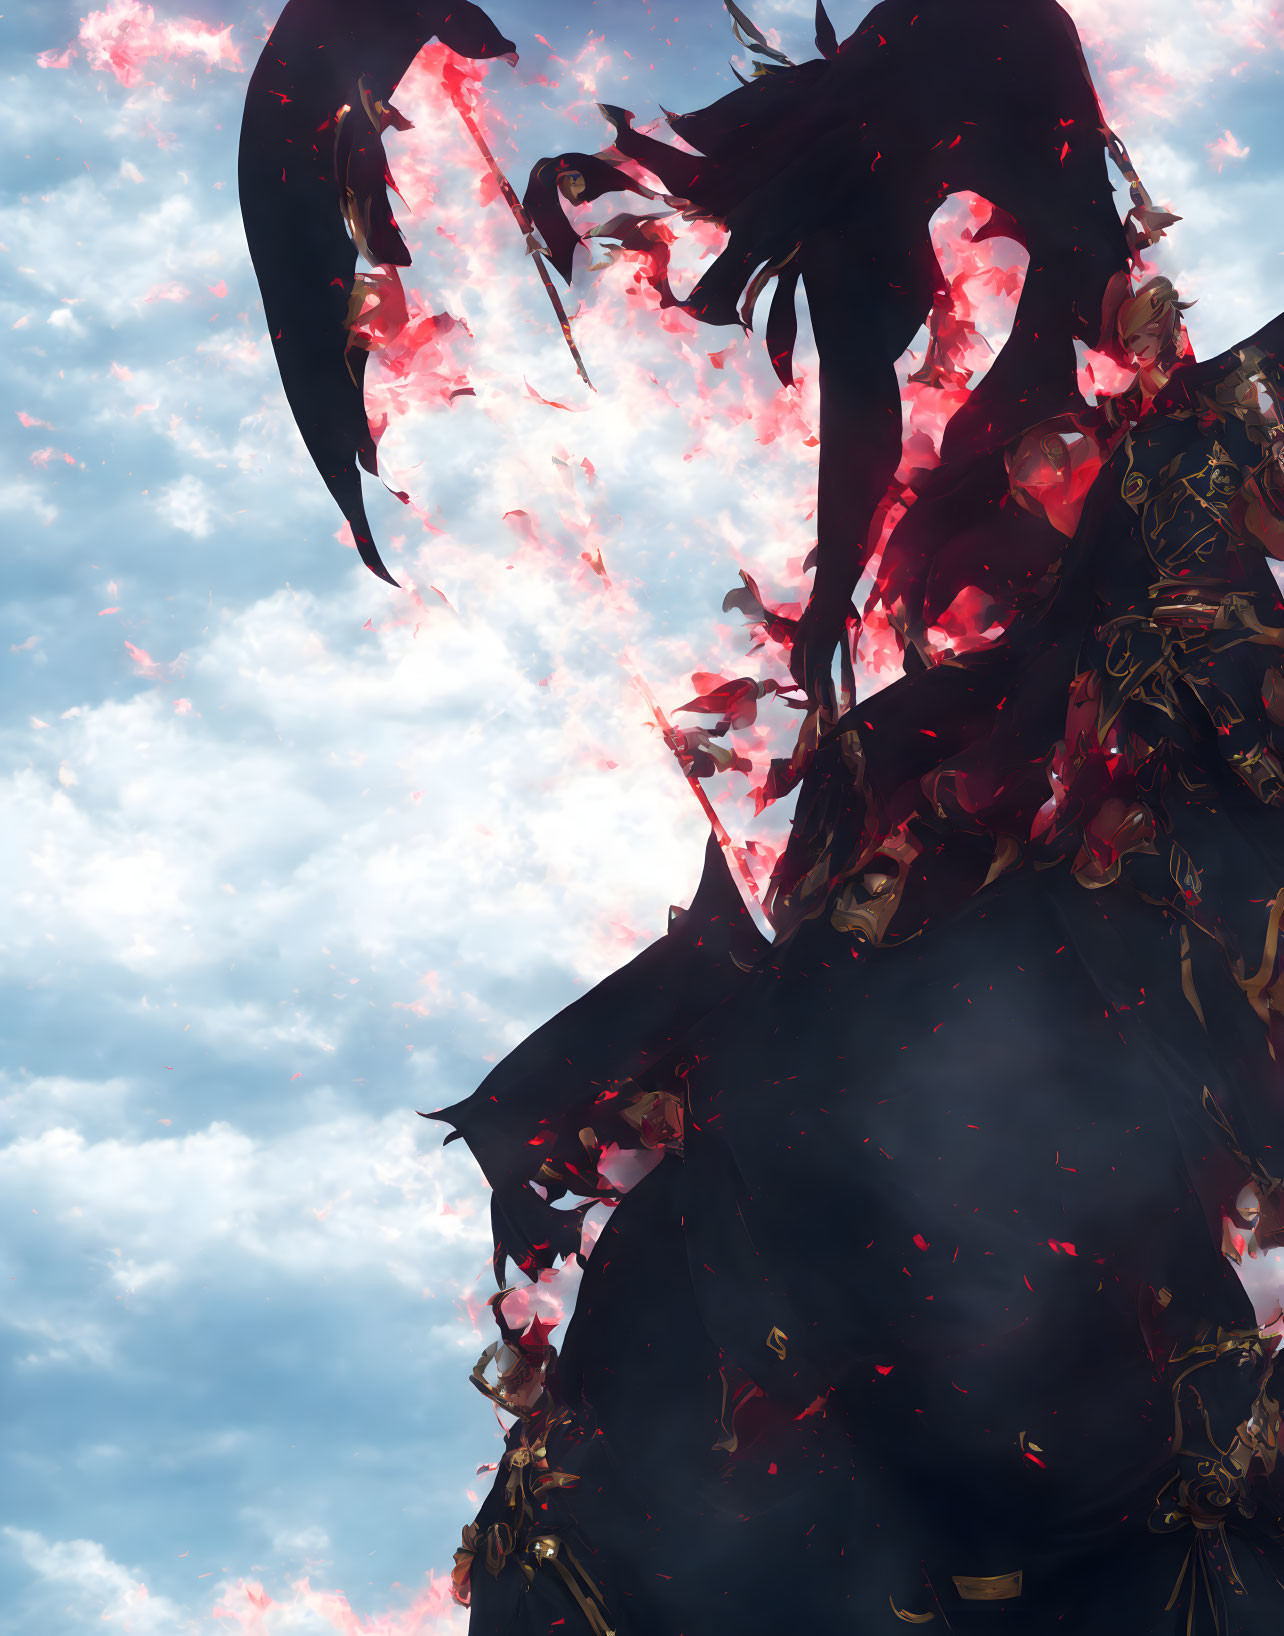 Dark dragon-like creature disintegrating in fiery sky